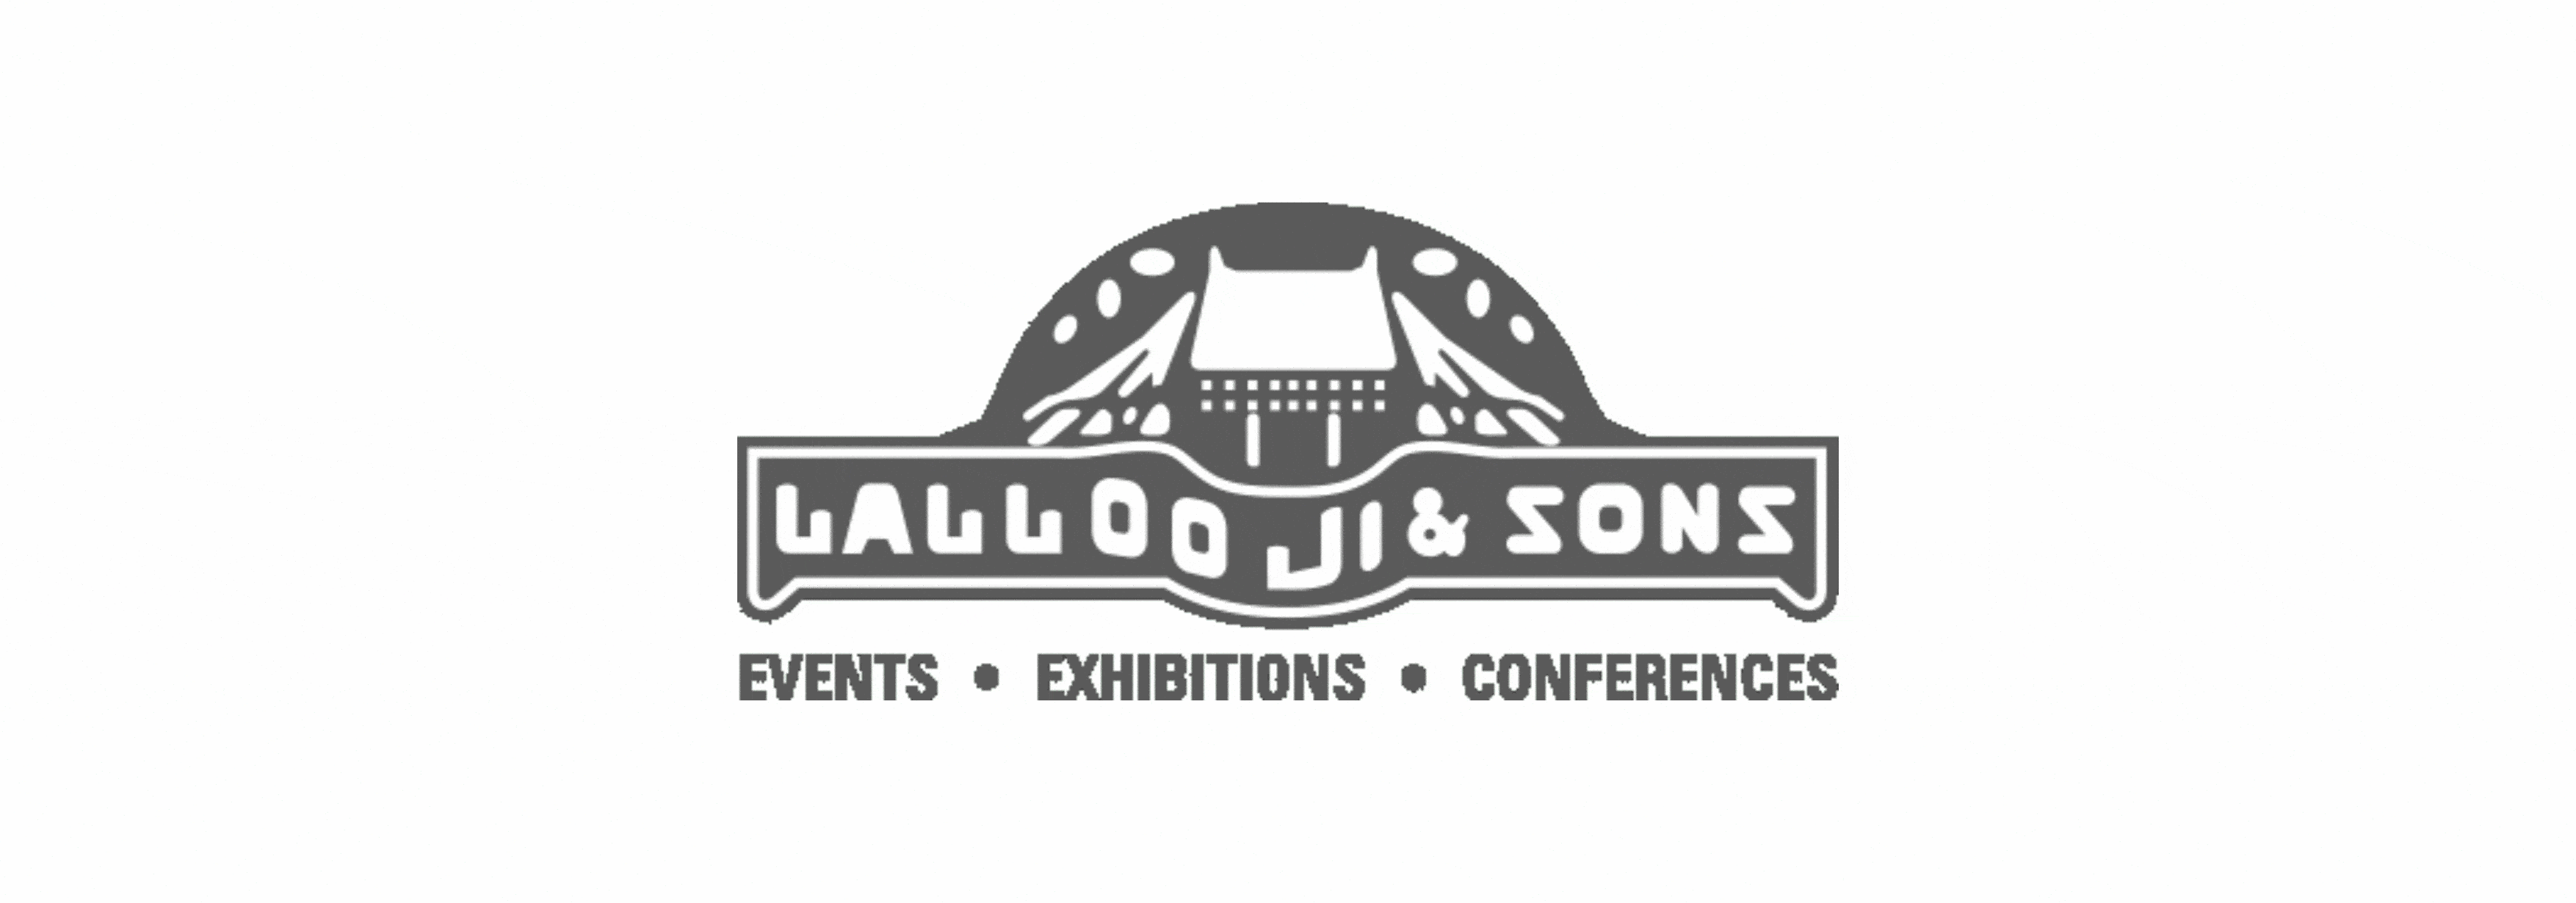 Lallooji & Sons